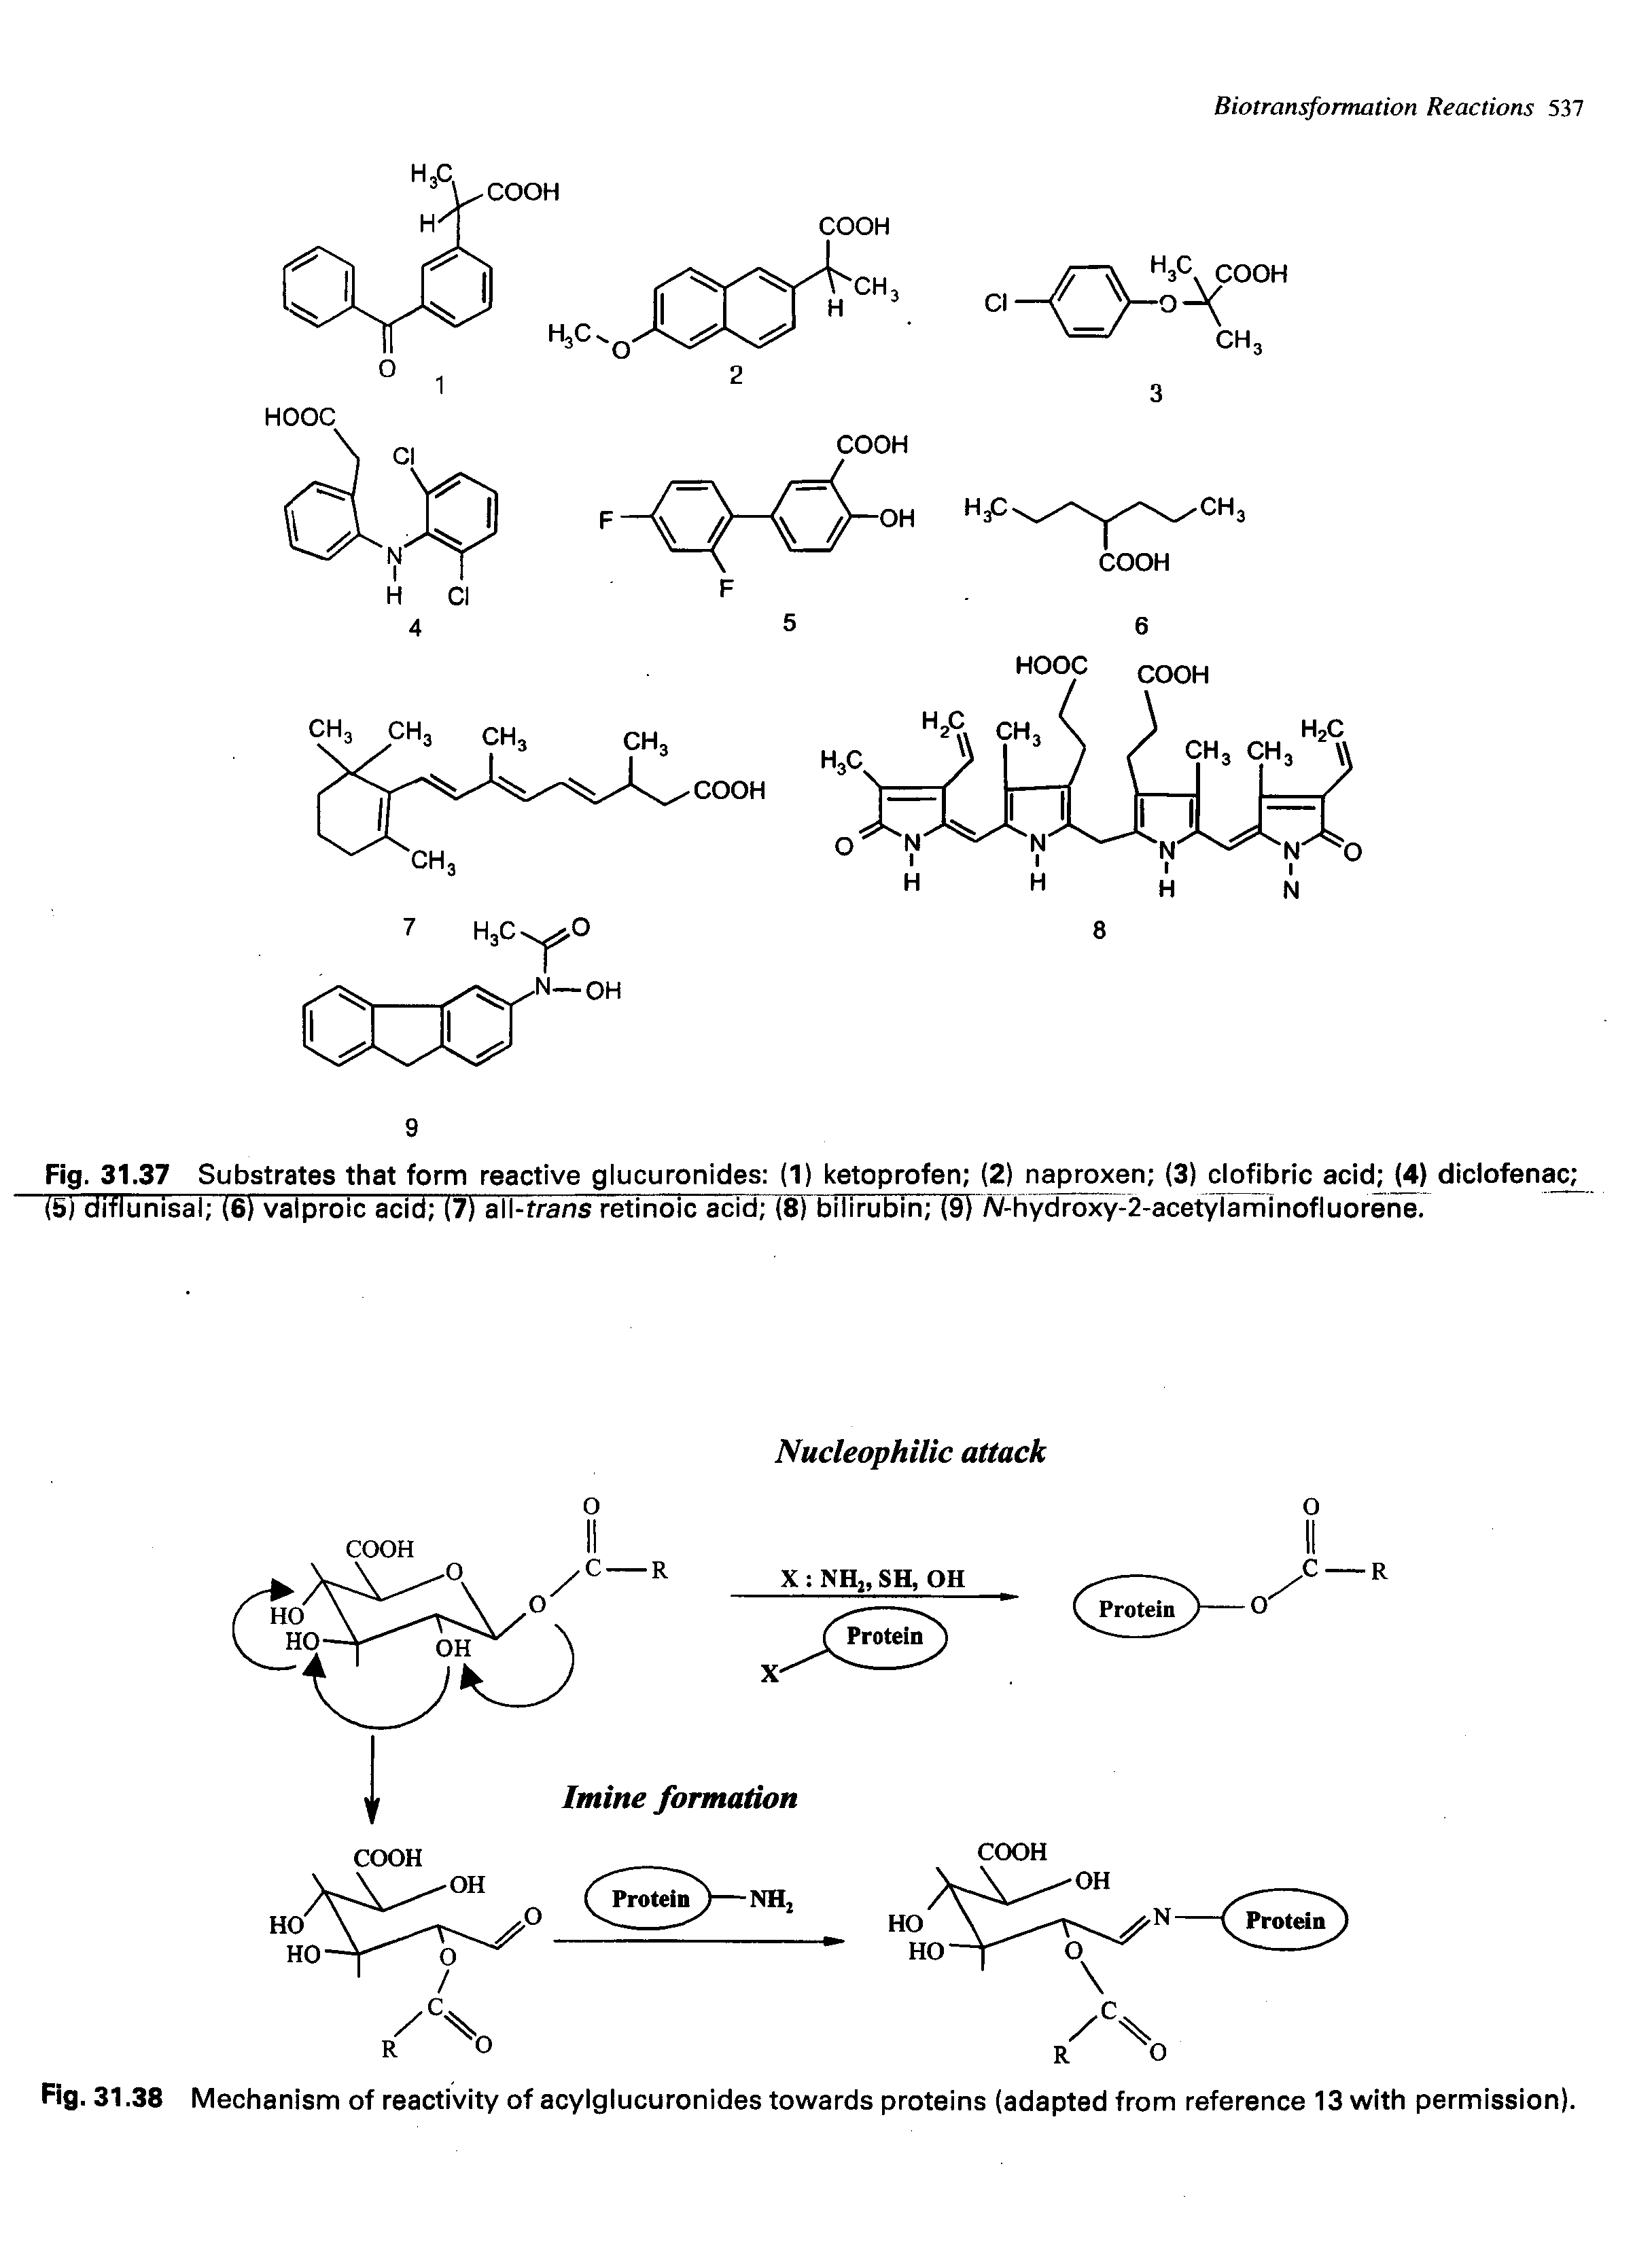 Fig. 31.37 Substrates that form reactive glucuronides (1) ketoprofen (2) naproxen (3) clofibric acid (4) diclofenac (5) diflunisal (6) valproic acid (7) all-frans retinoic acid (8) bilirubin (9) A/-hydroxy-2-acetyTaminofluorene.